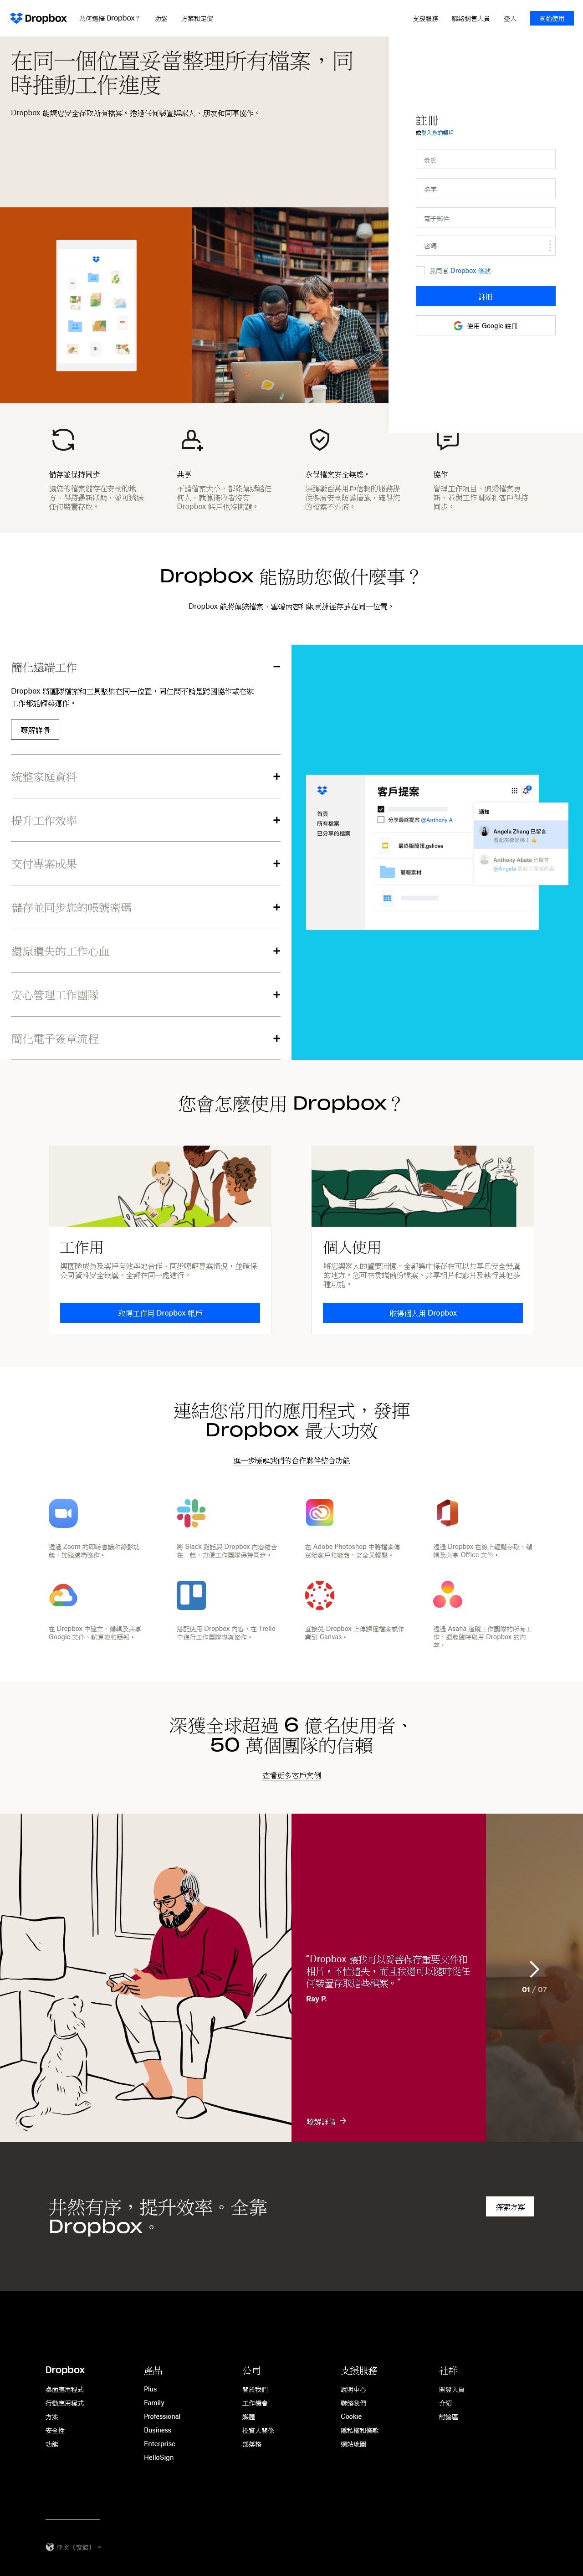 Dropbox_fullpage